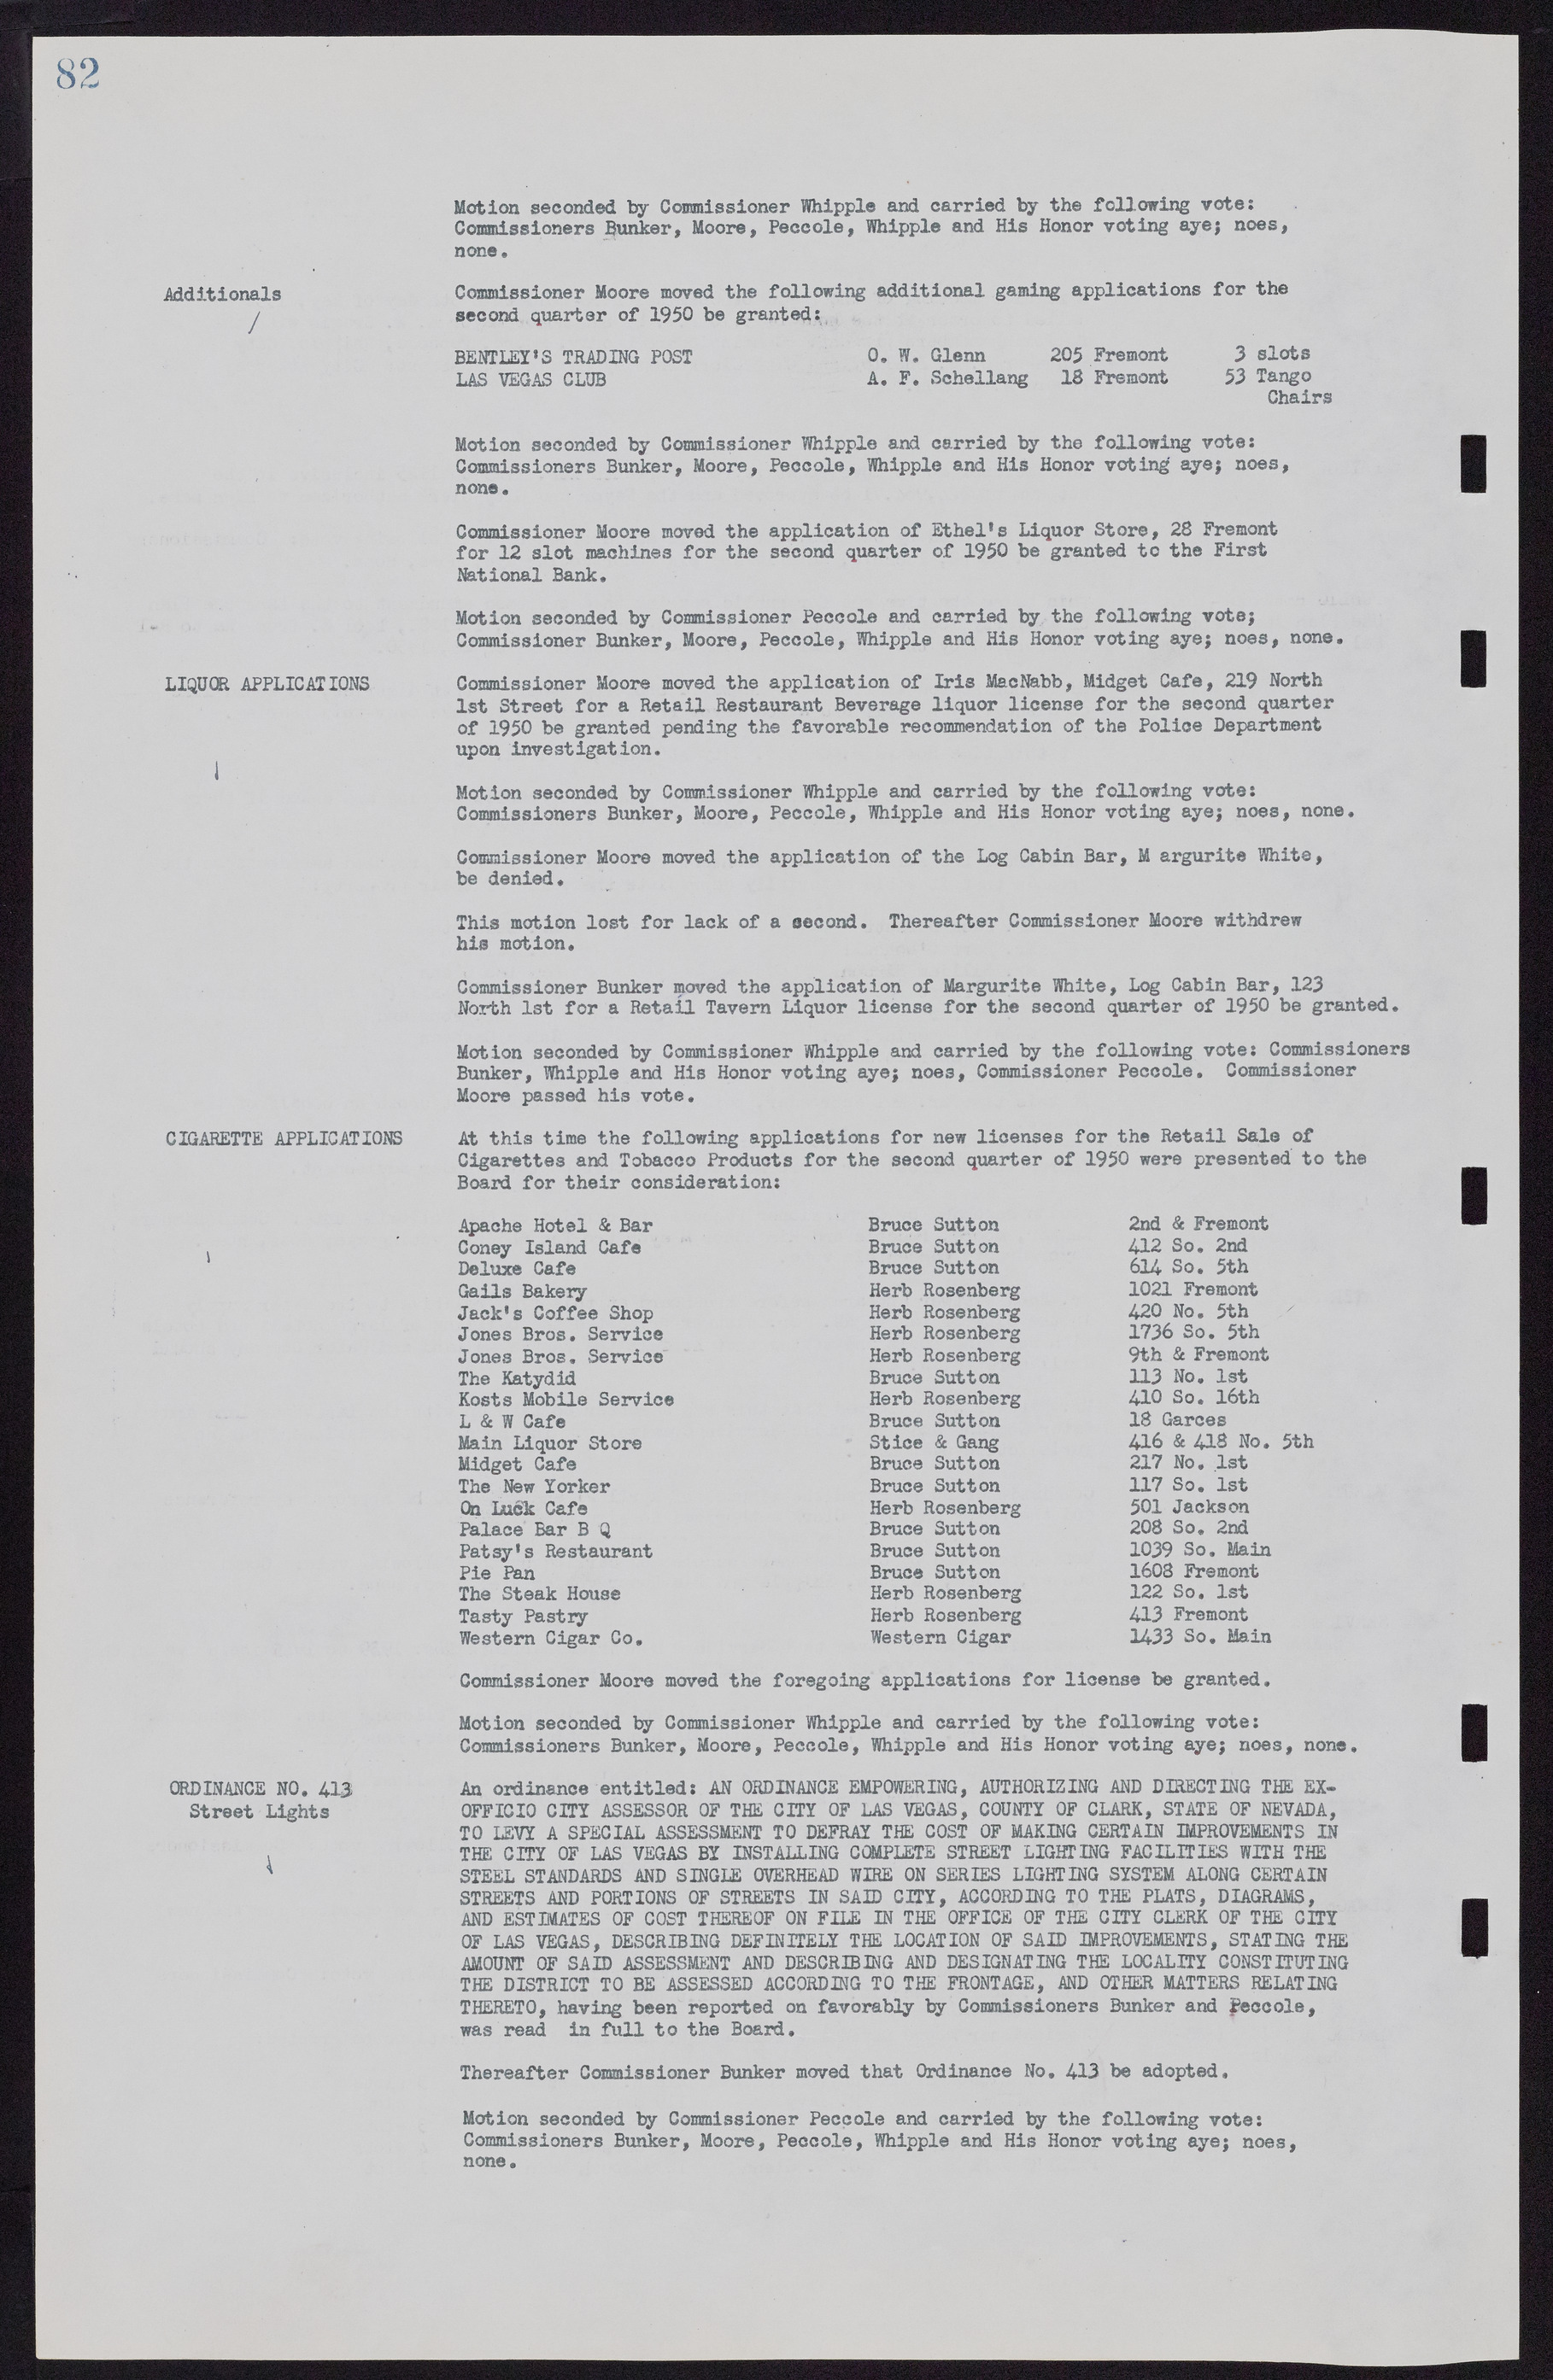 Las Vegas City Commission Minutes, November 7, 1949 to May 21, 1952, lvc000007-90